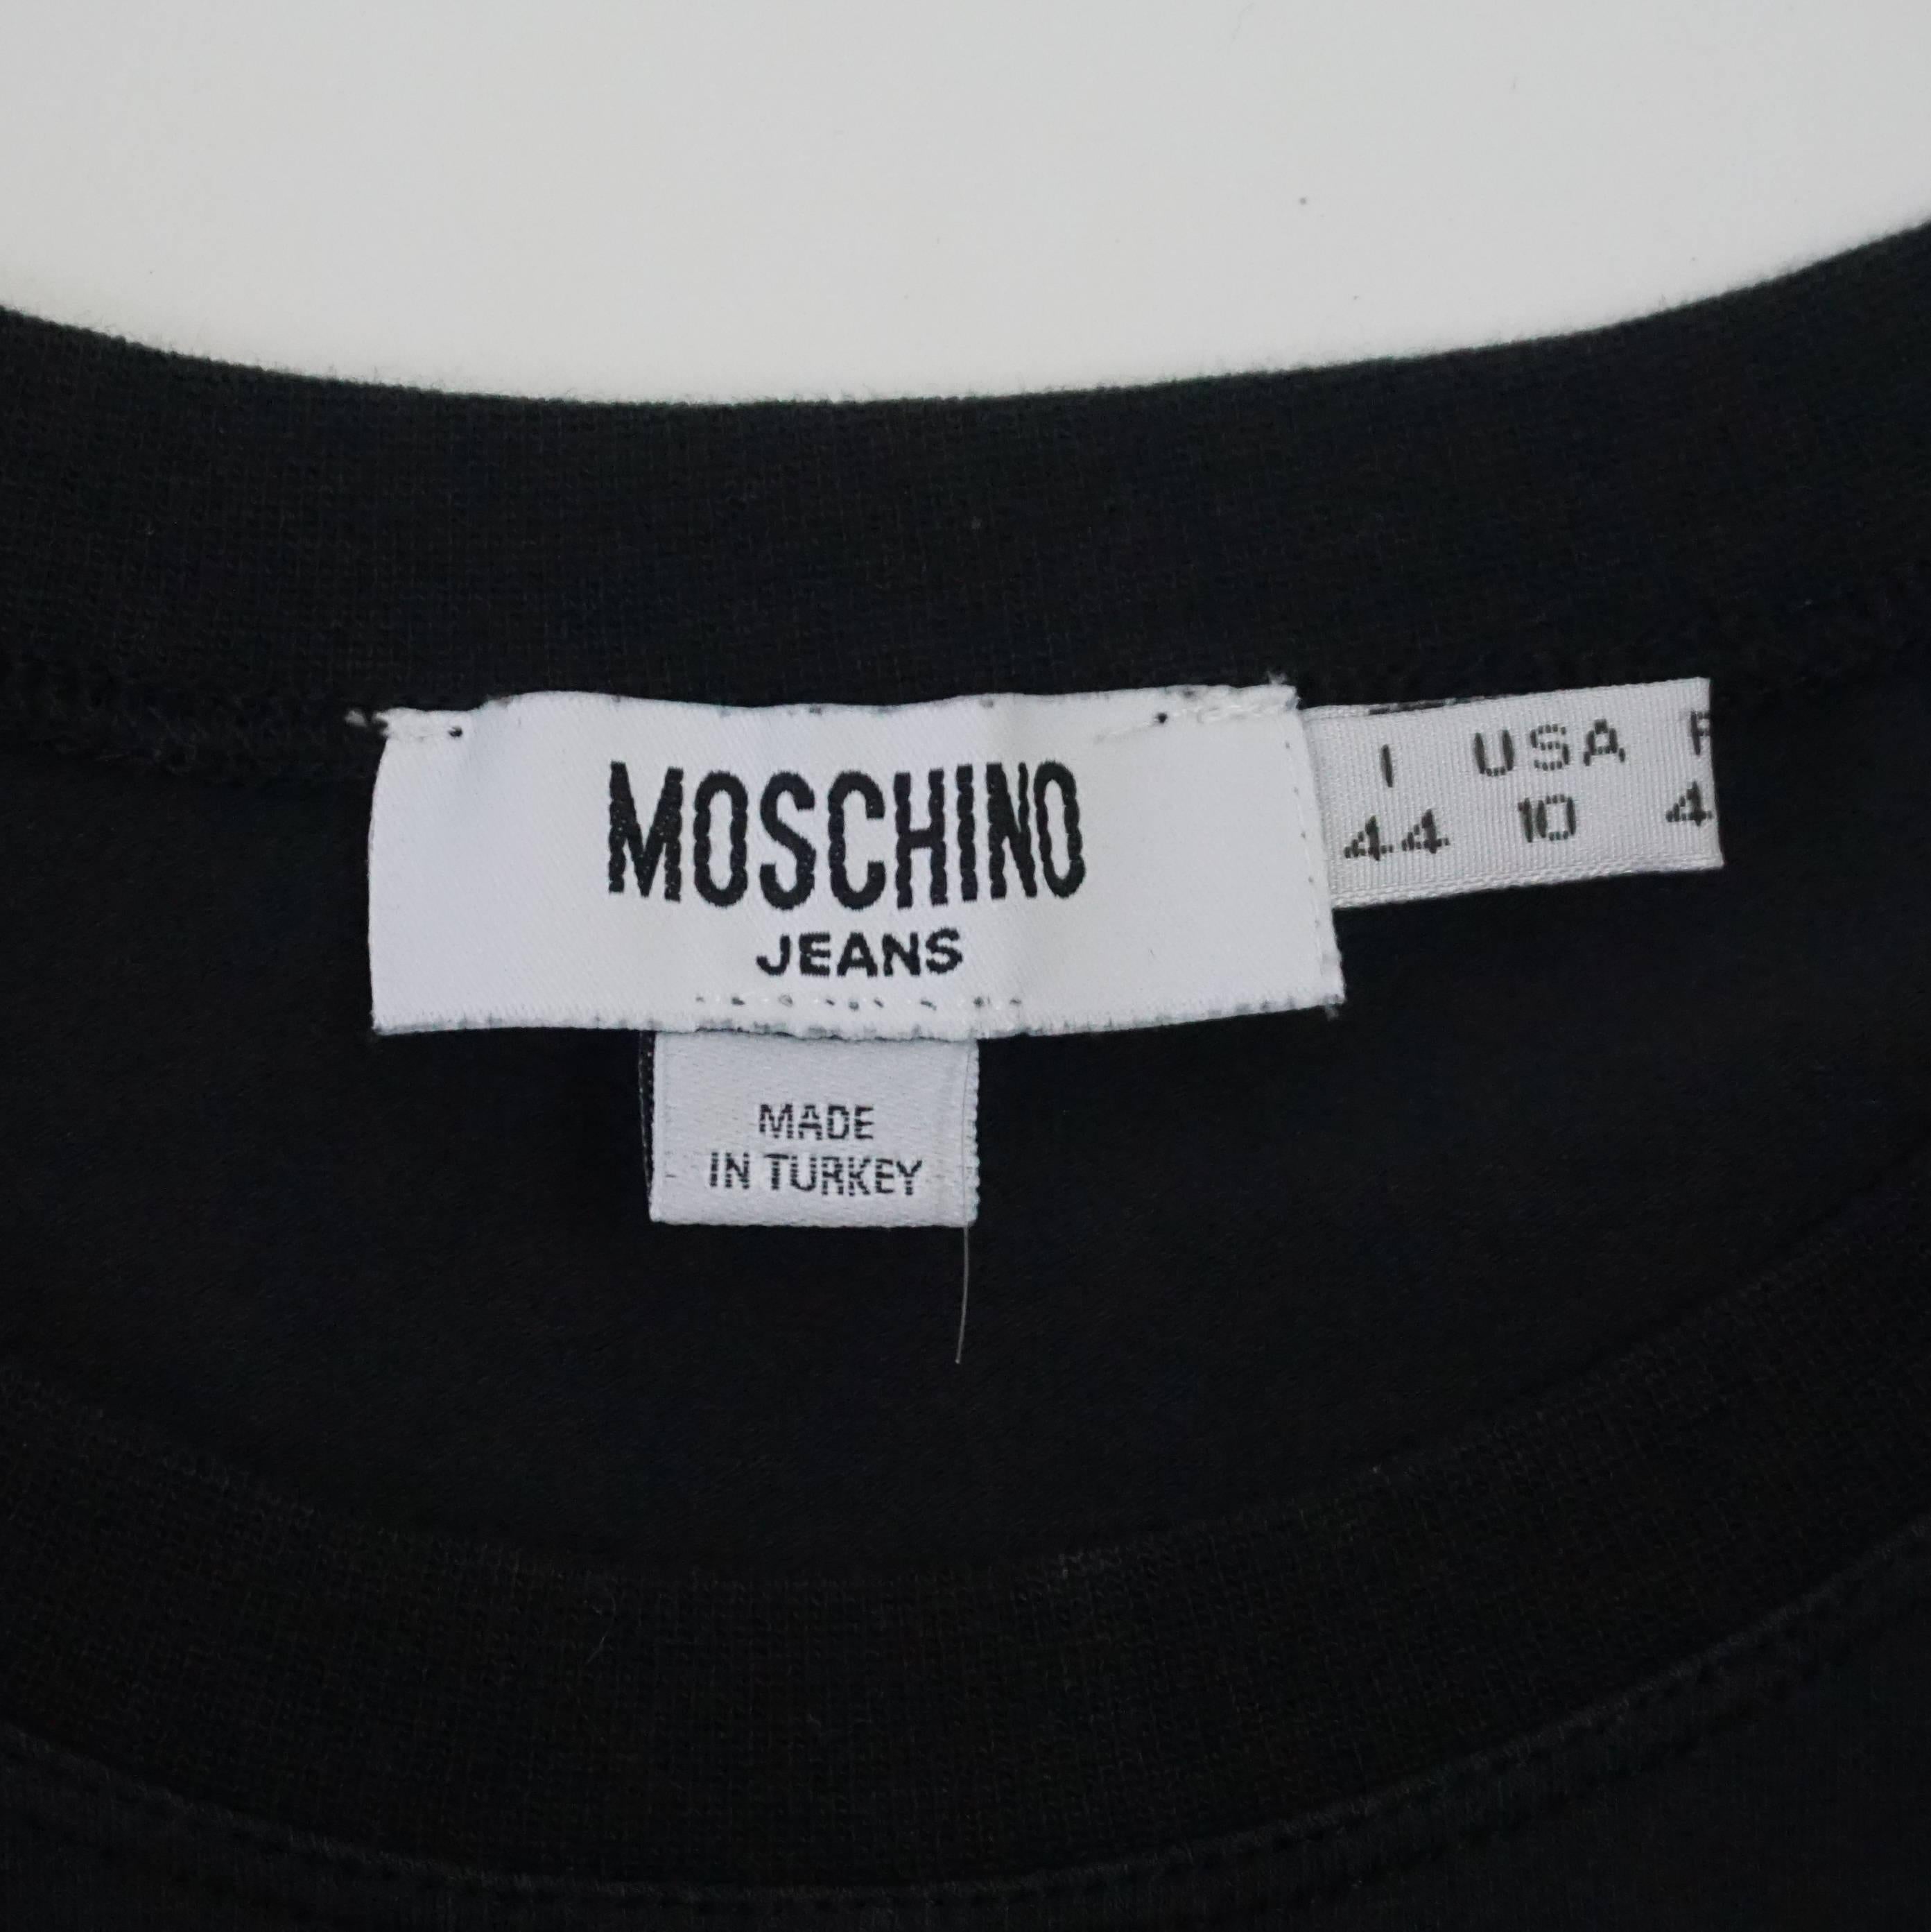 moschino jeans shirt